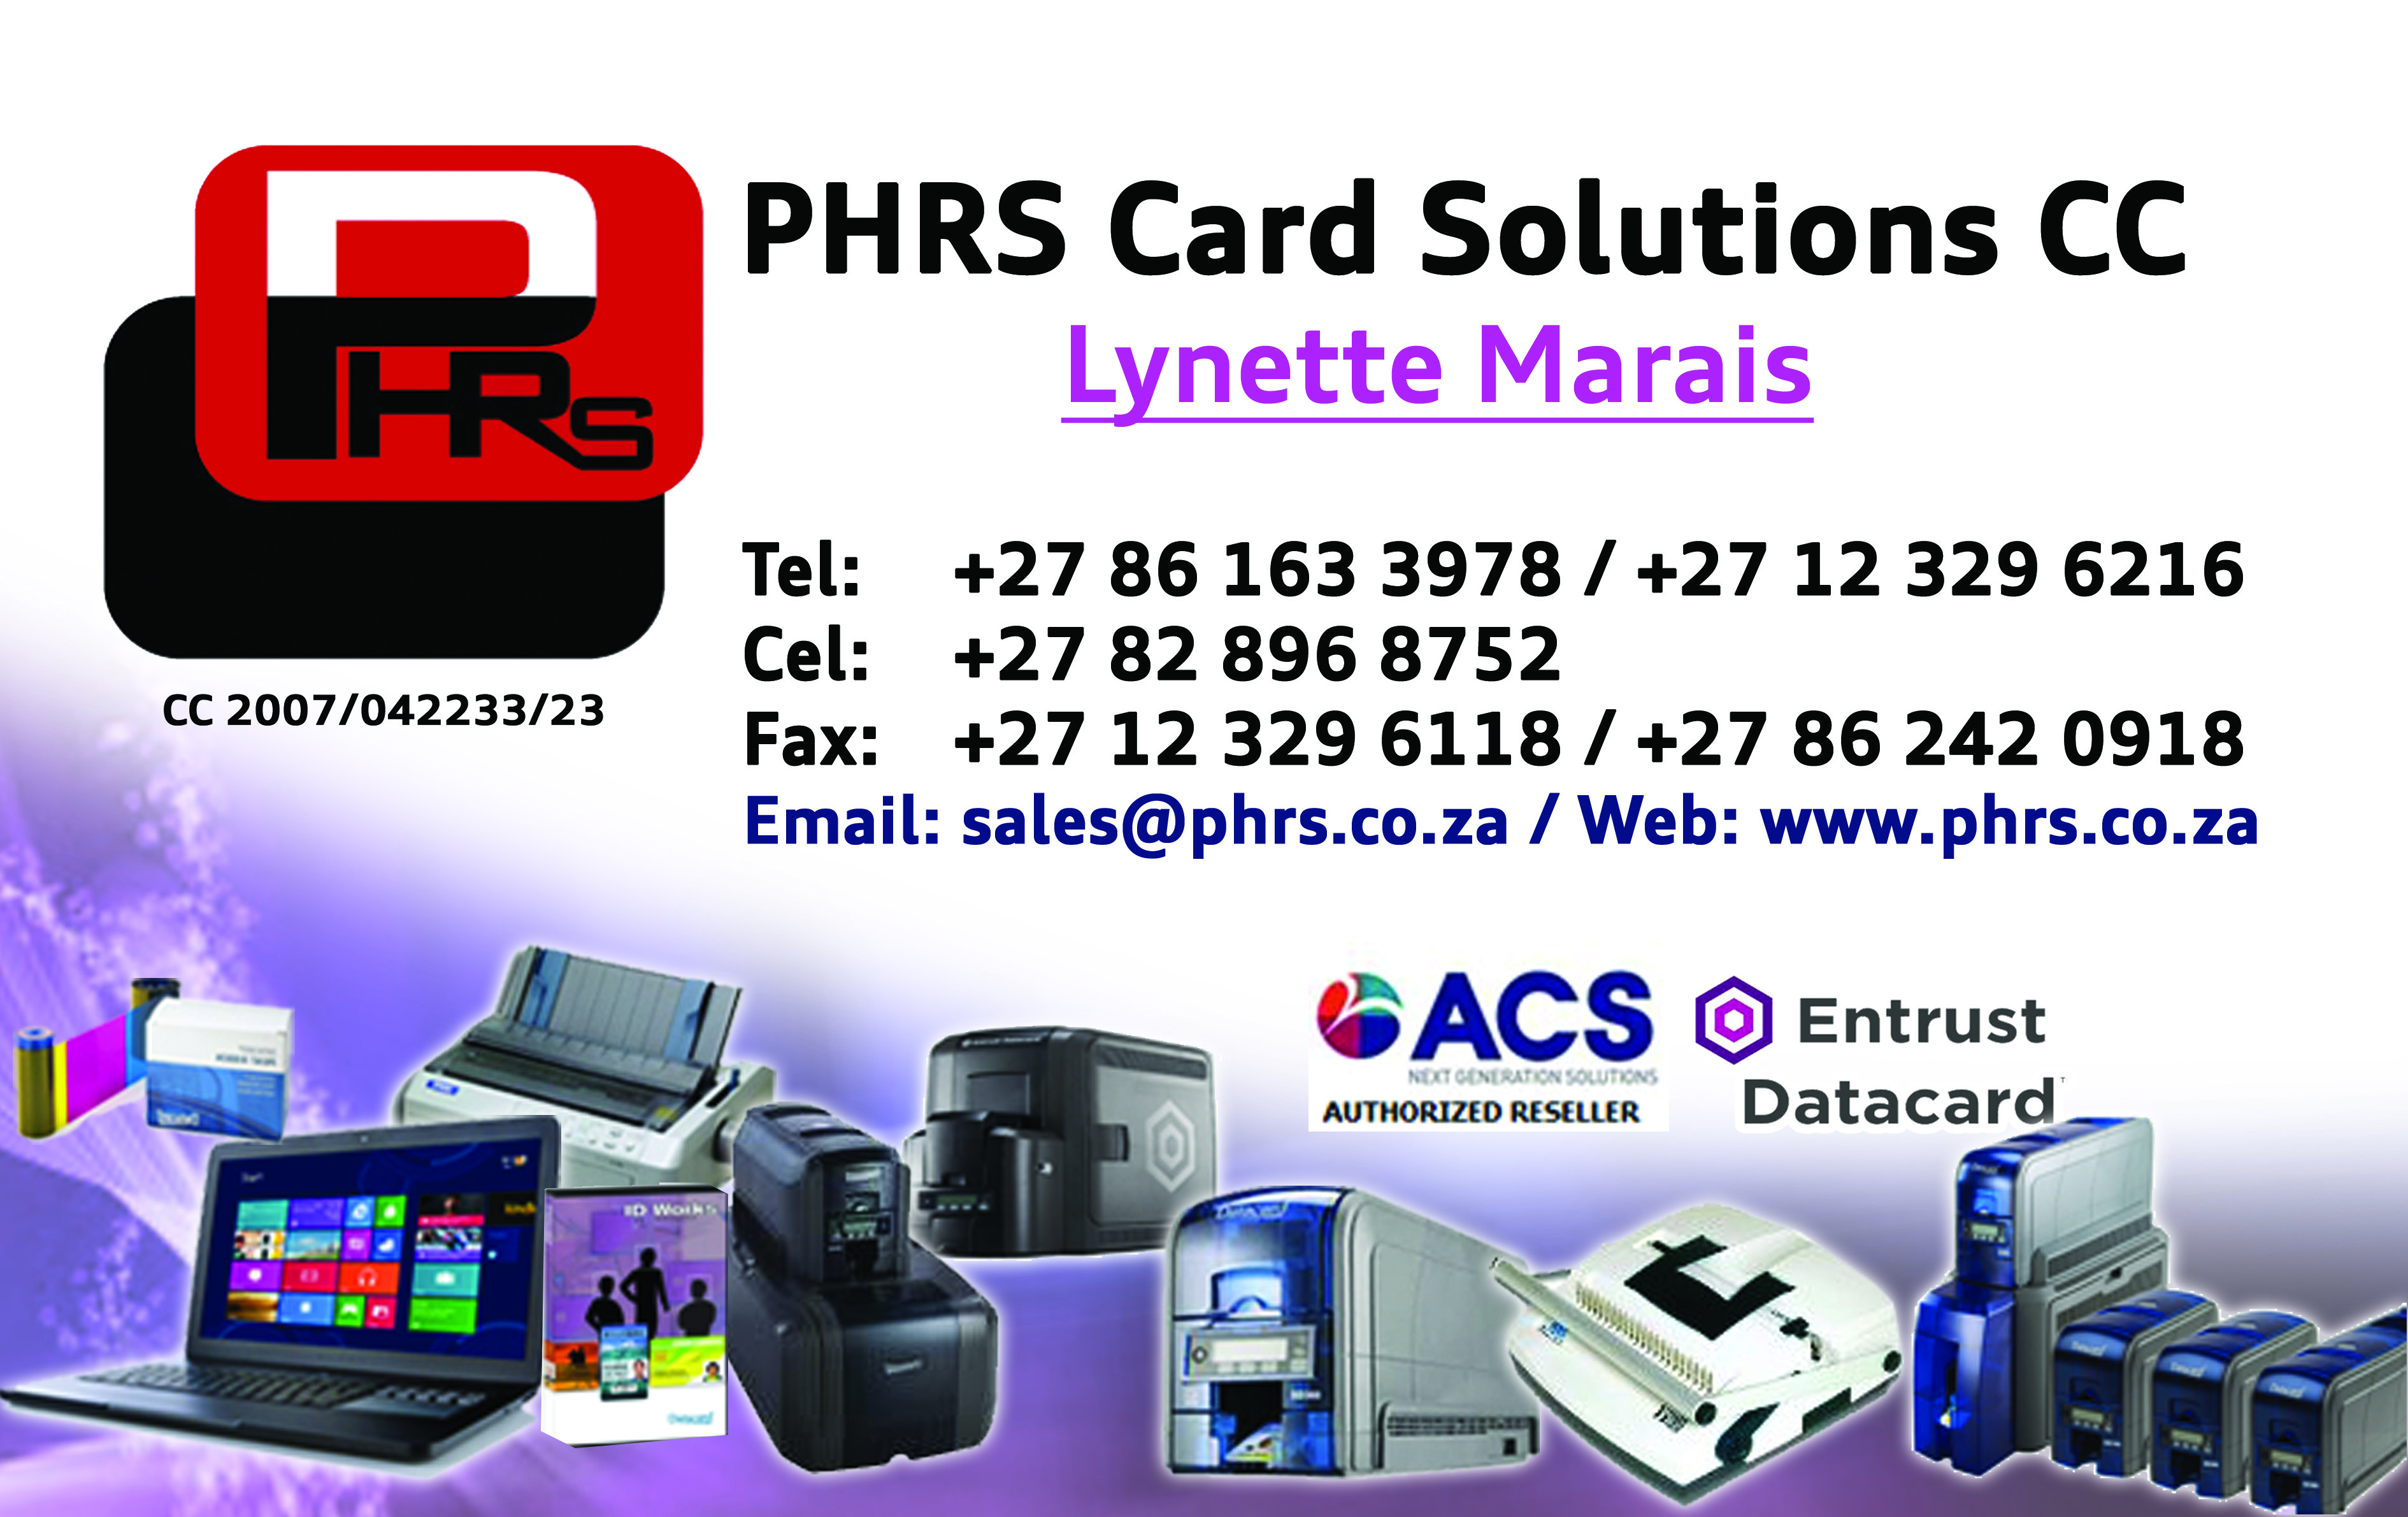 PHRS CARD SOLUTIONS CC logo